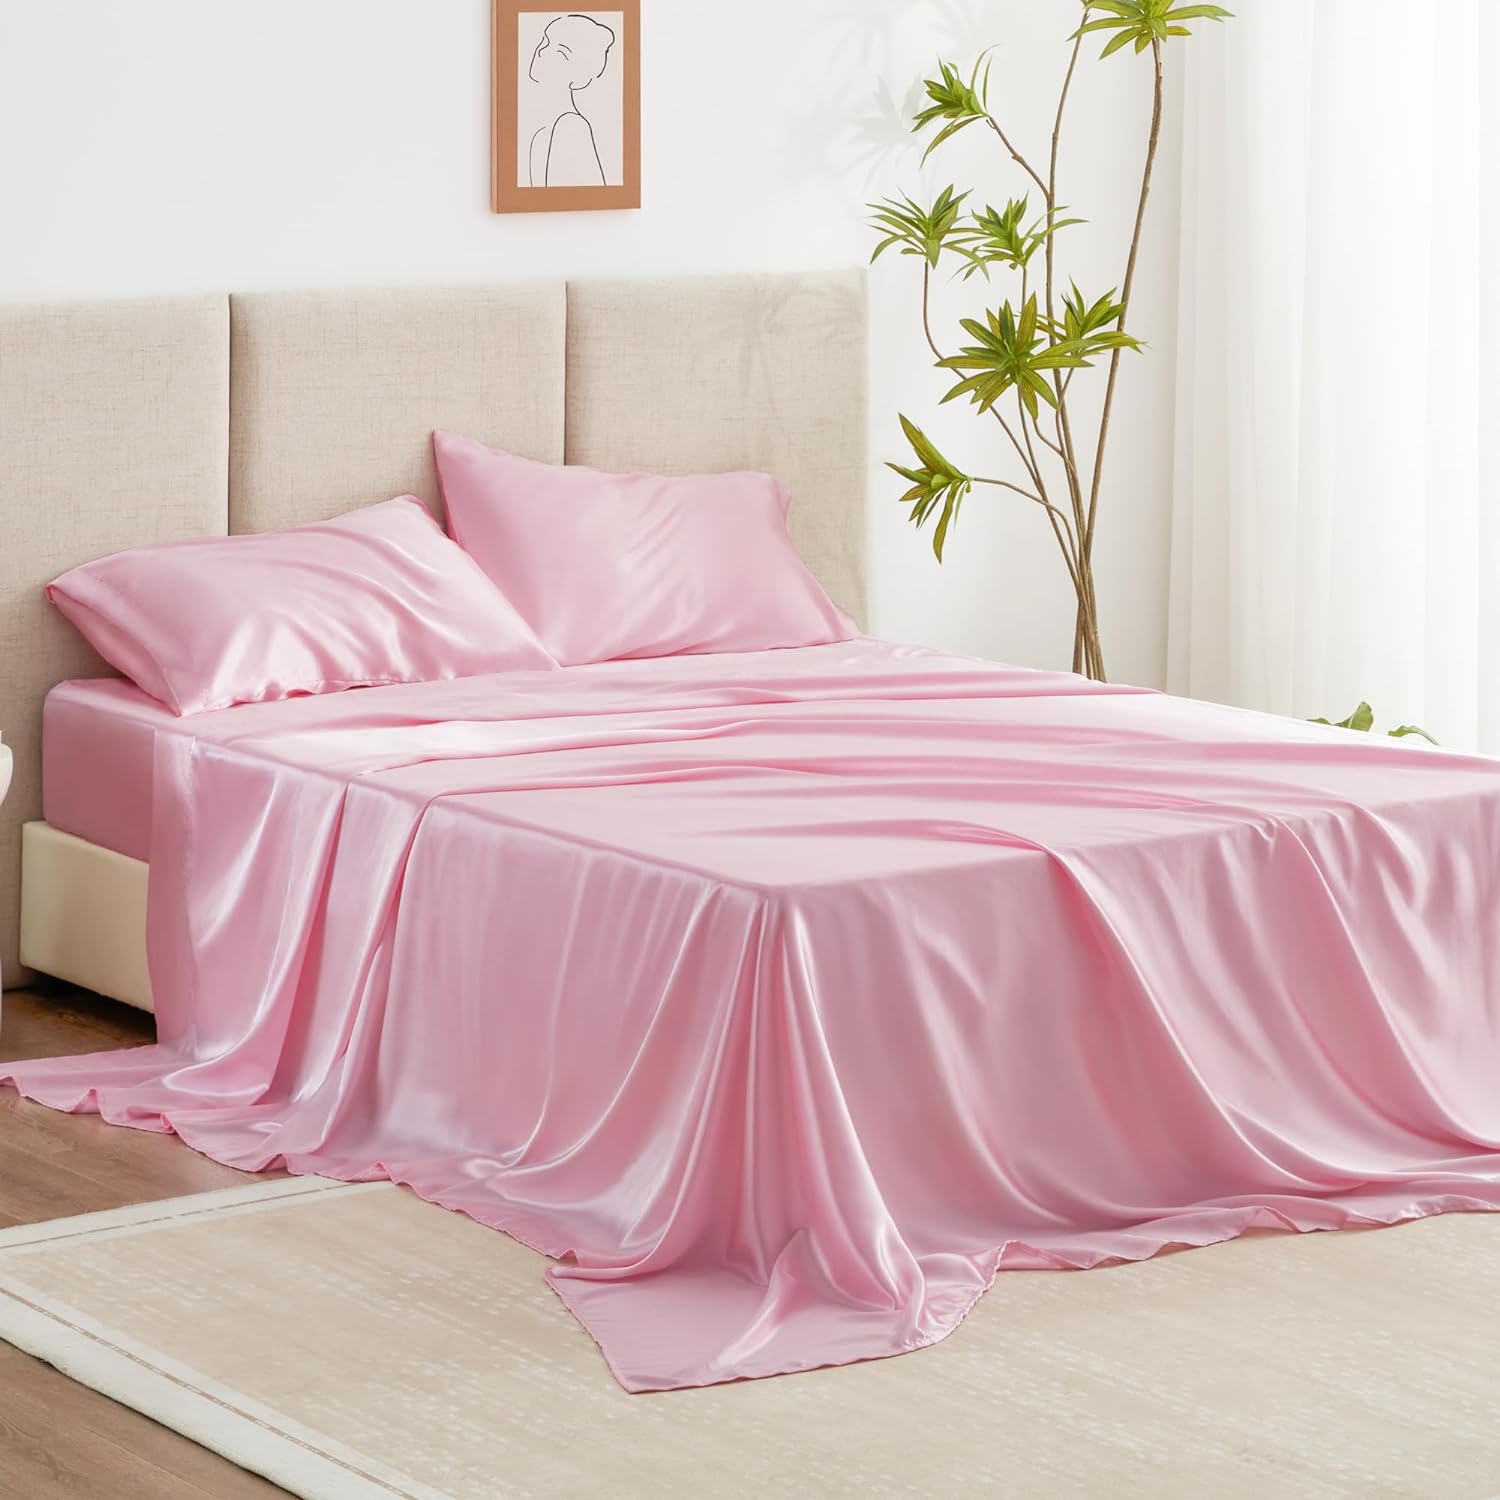 Love' cabin Satin Queen Sheets Set - 4 Piece Pink Silky Satin Bed Sheets Queen Set with Deep Pocket, Luxury Silk Feel Satin Queen Size Sheet Set (1 Flat Sheet,1 Fitted Sheet,2 Pillow Cases)